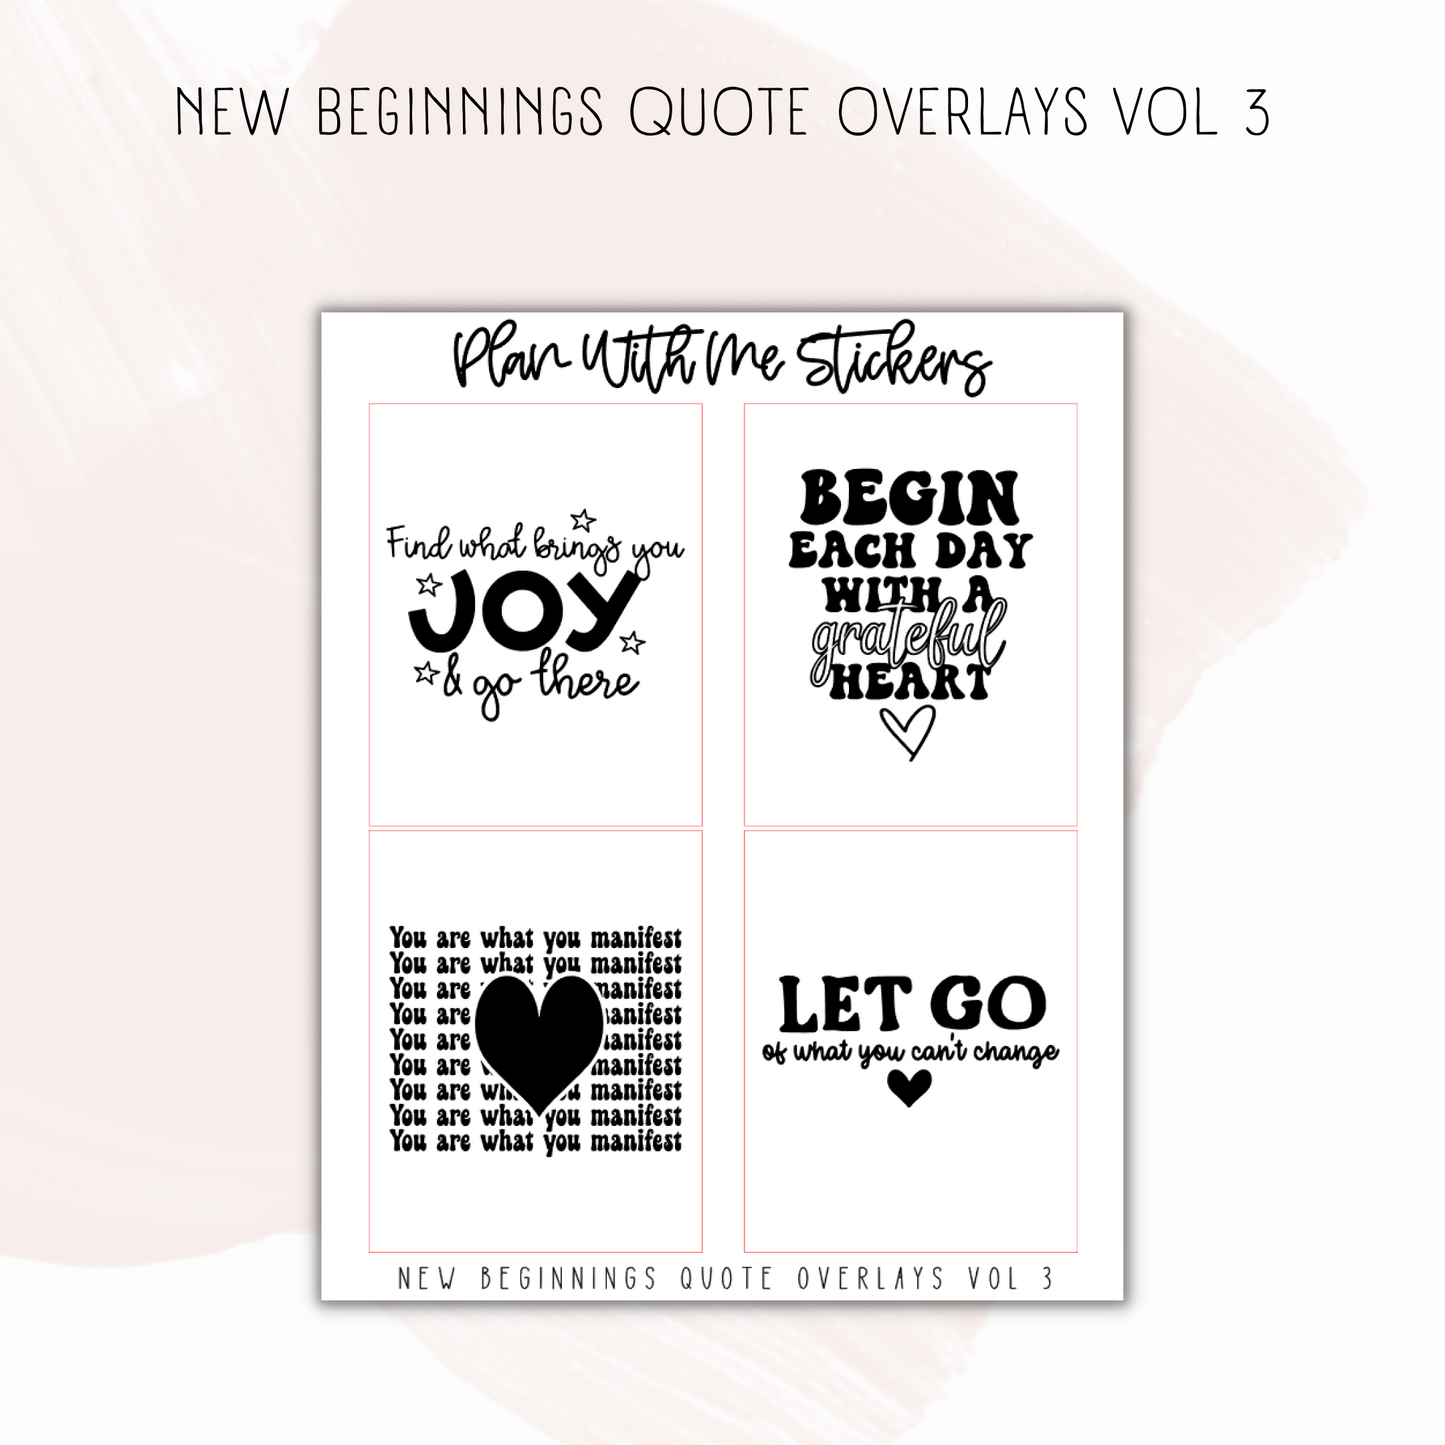 New Beginnings Quote Overlays Vol 3